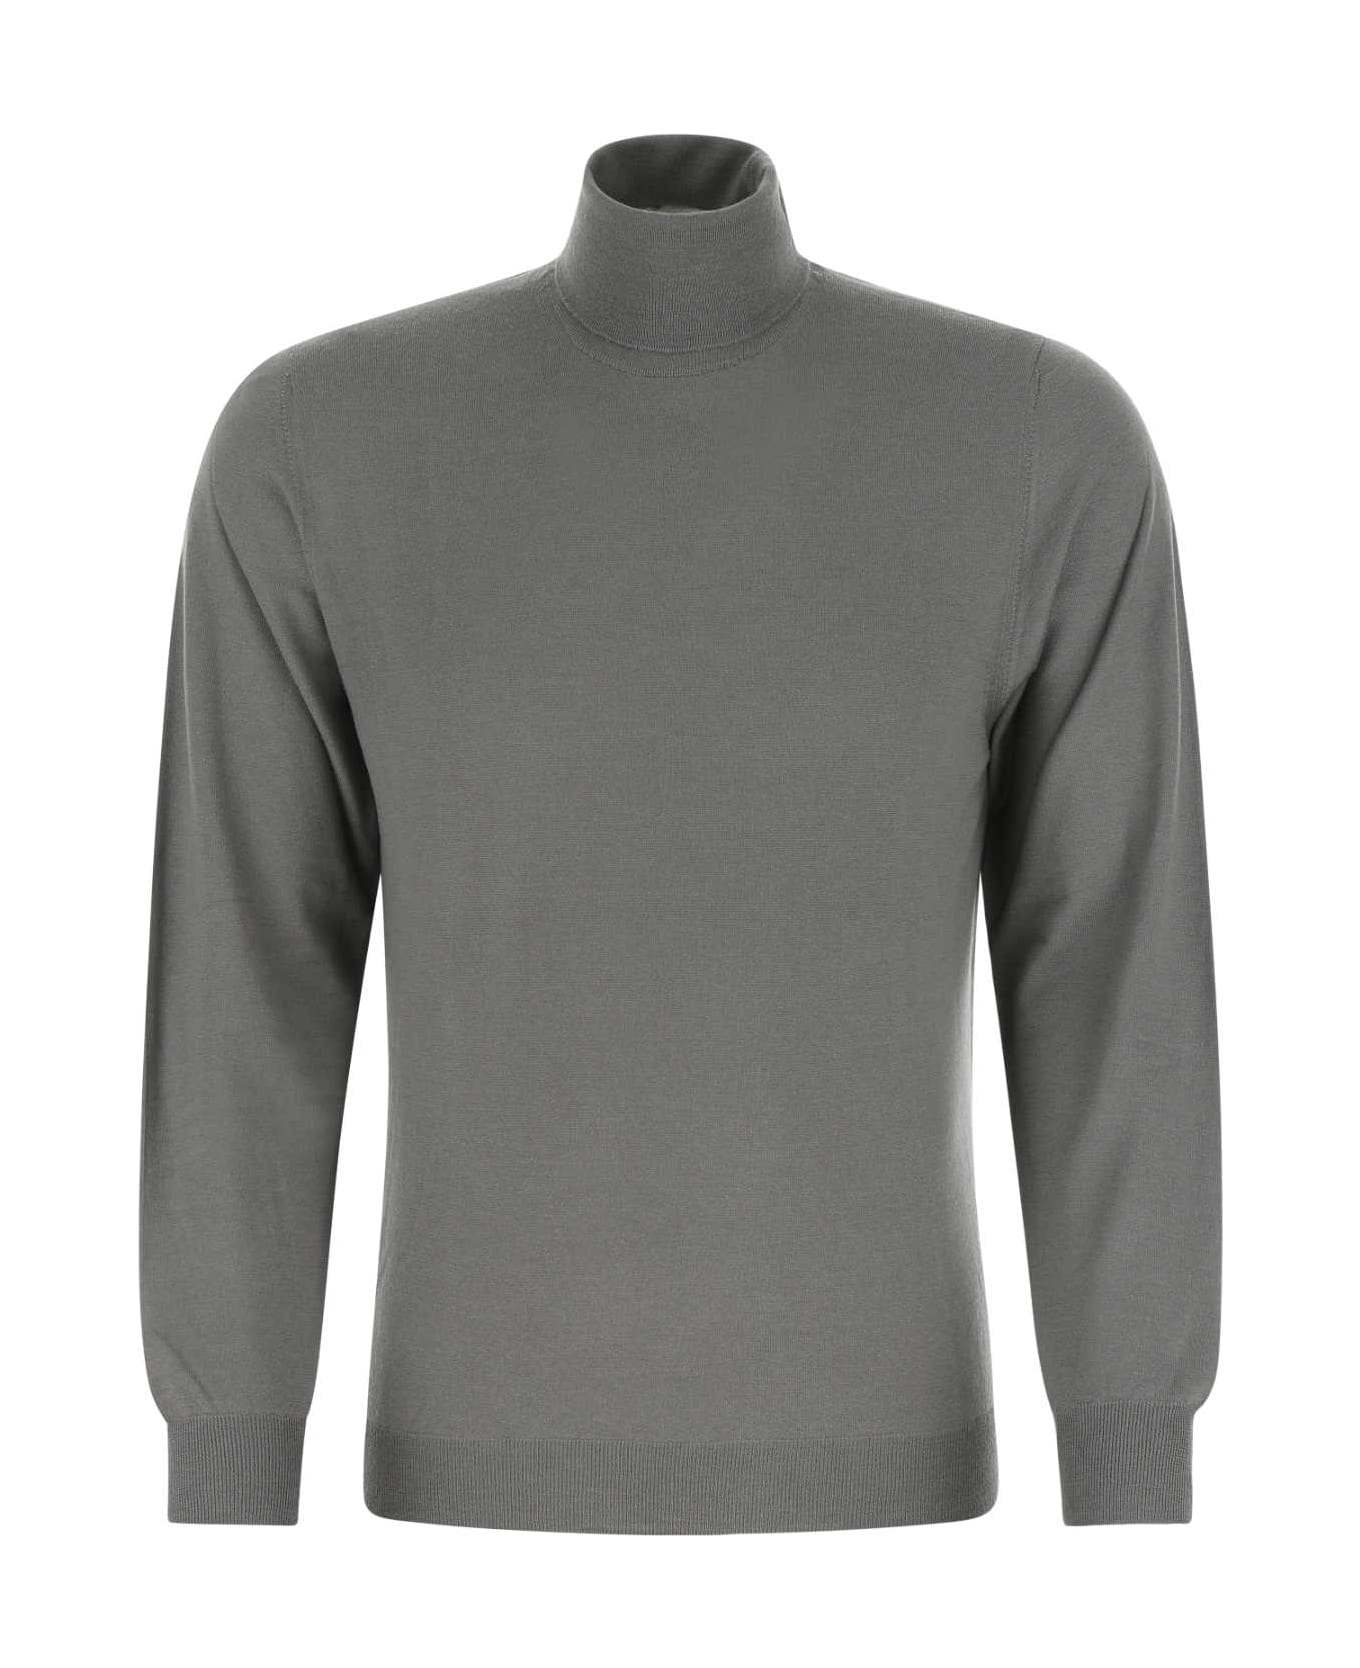 Fedeli Grey Wool Sweater - 51 ニットウェア